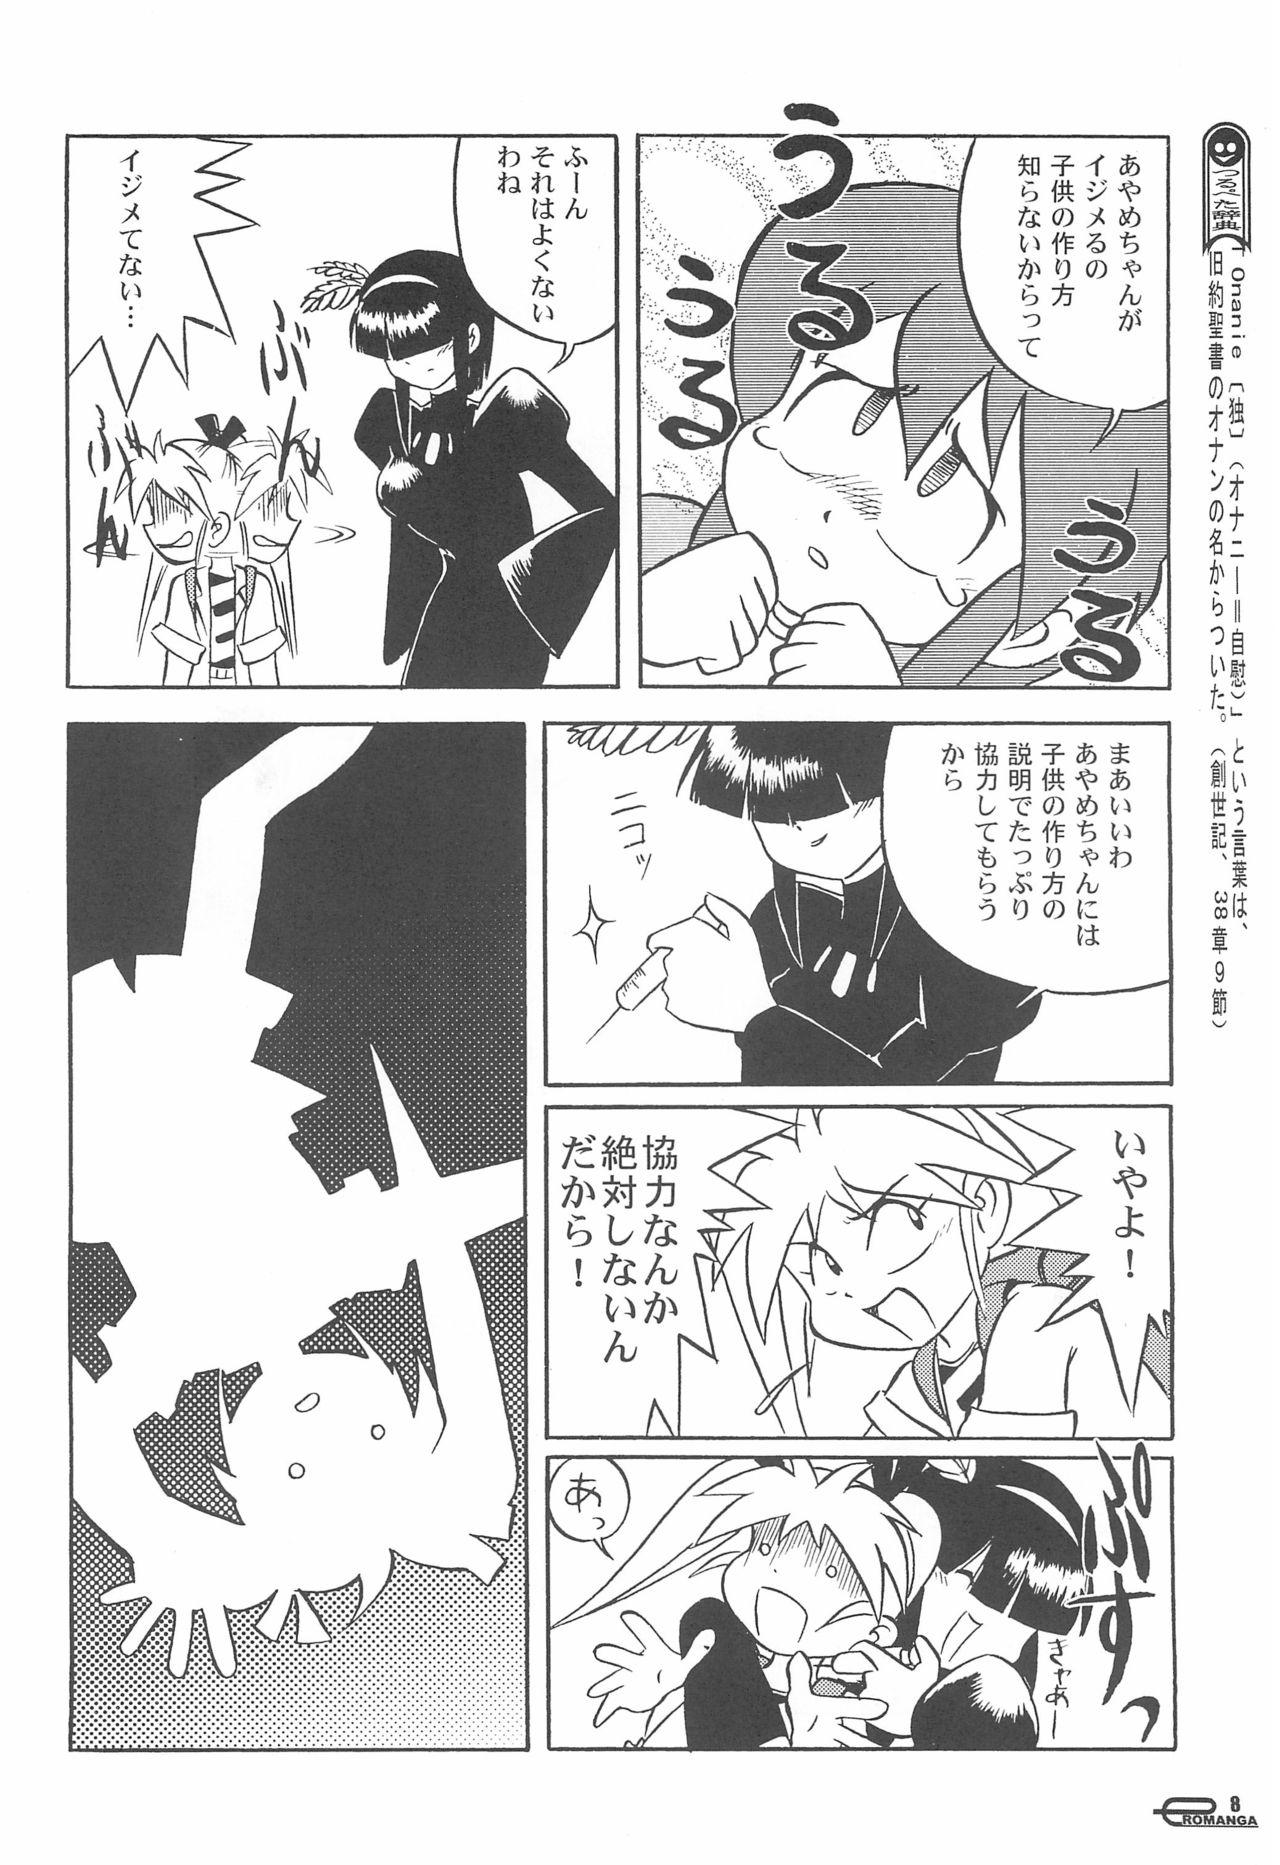 Perverted Manga Science Onna no ko no Himitsu - Manga science Suruba - Page 10